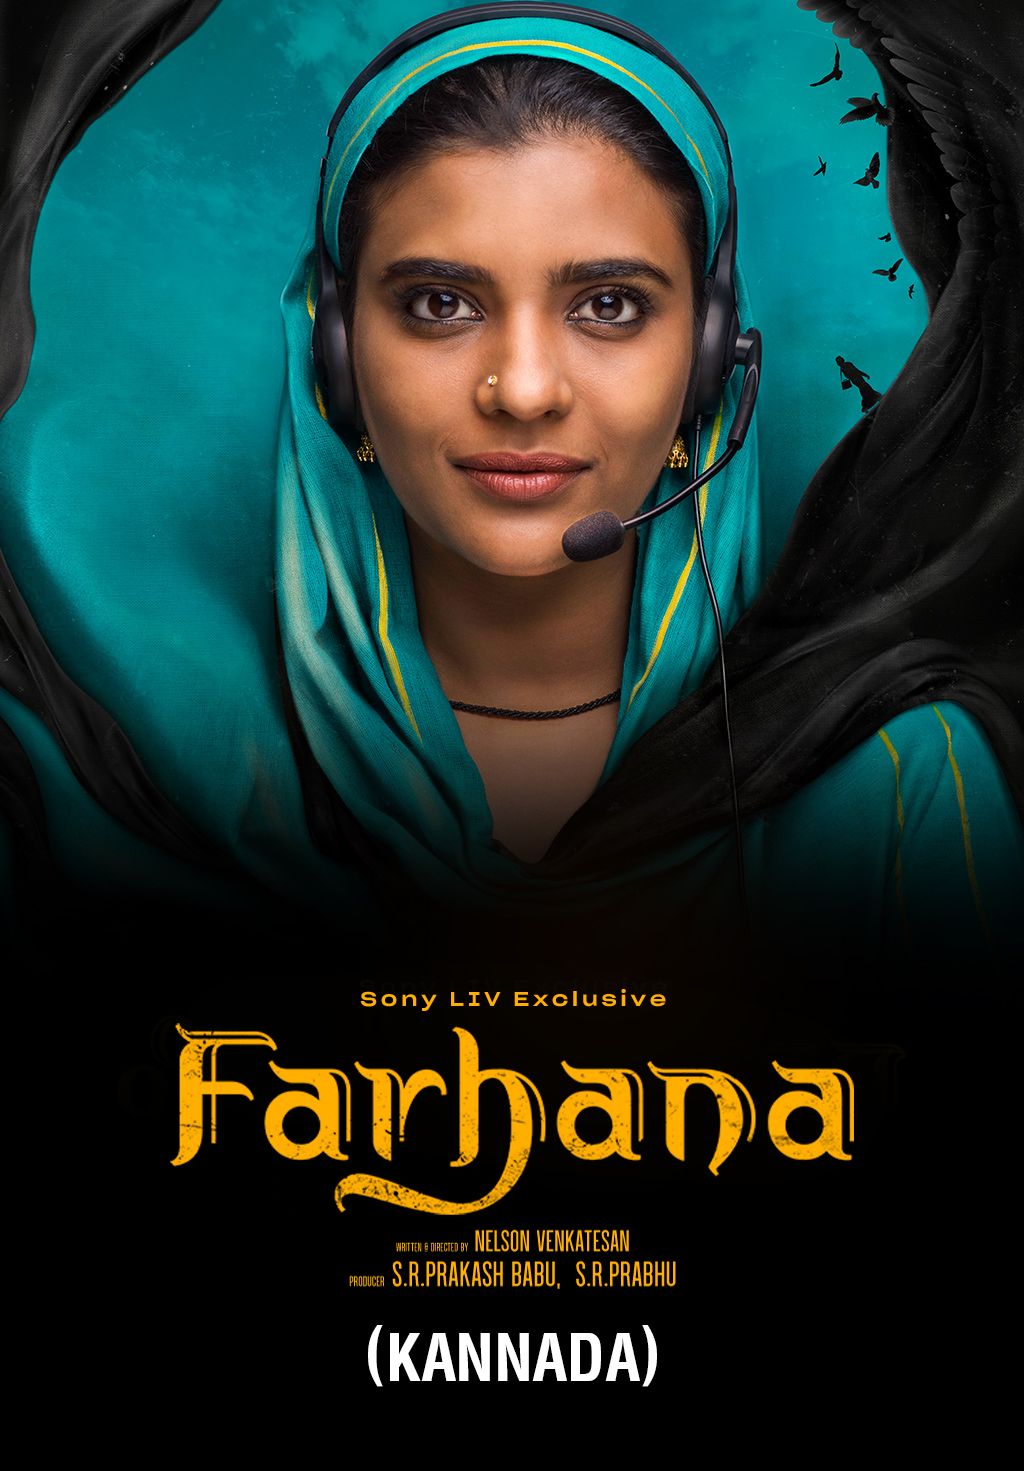 Farhana (Kannada)